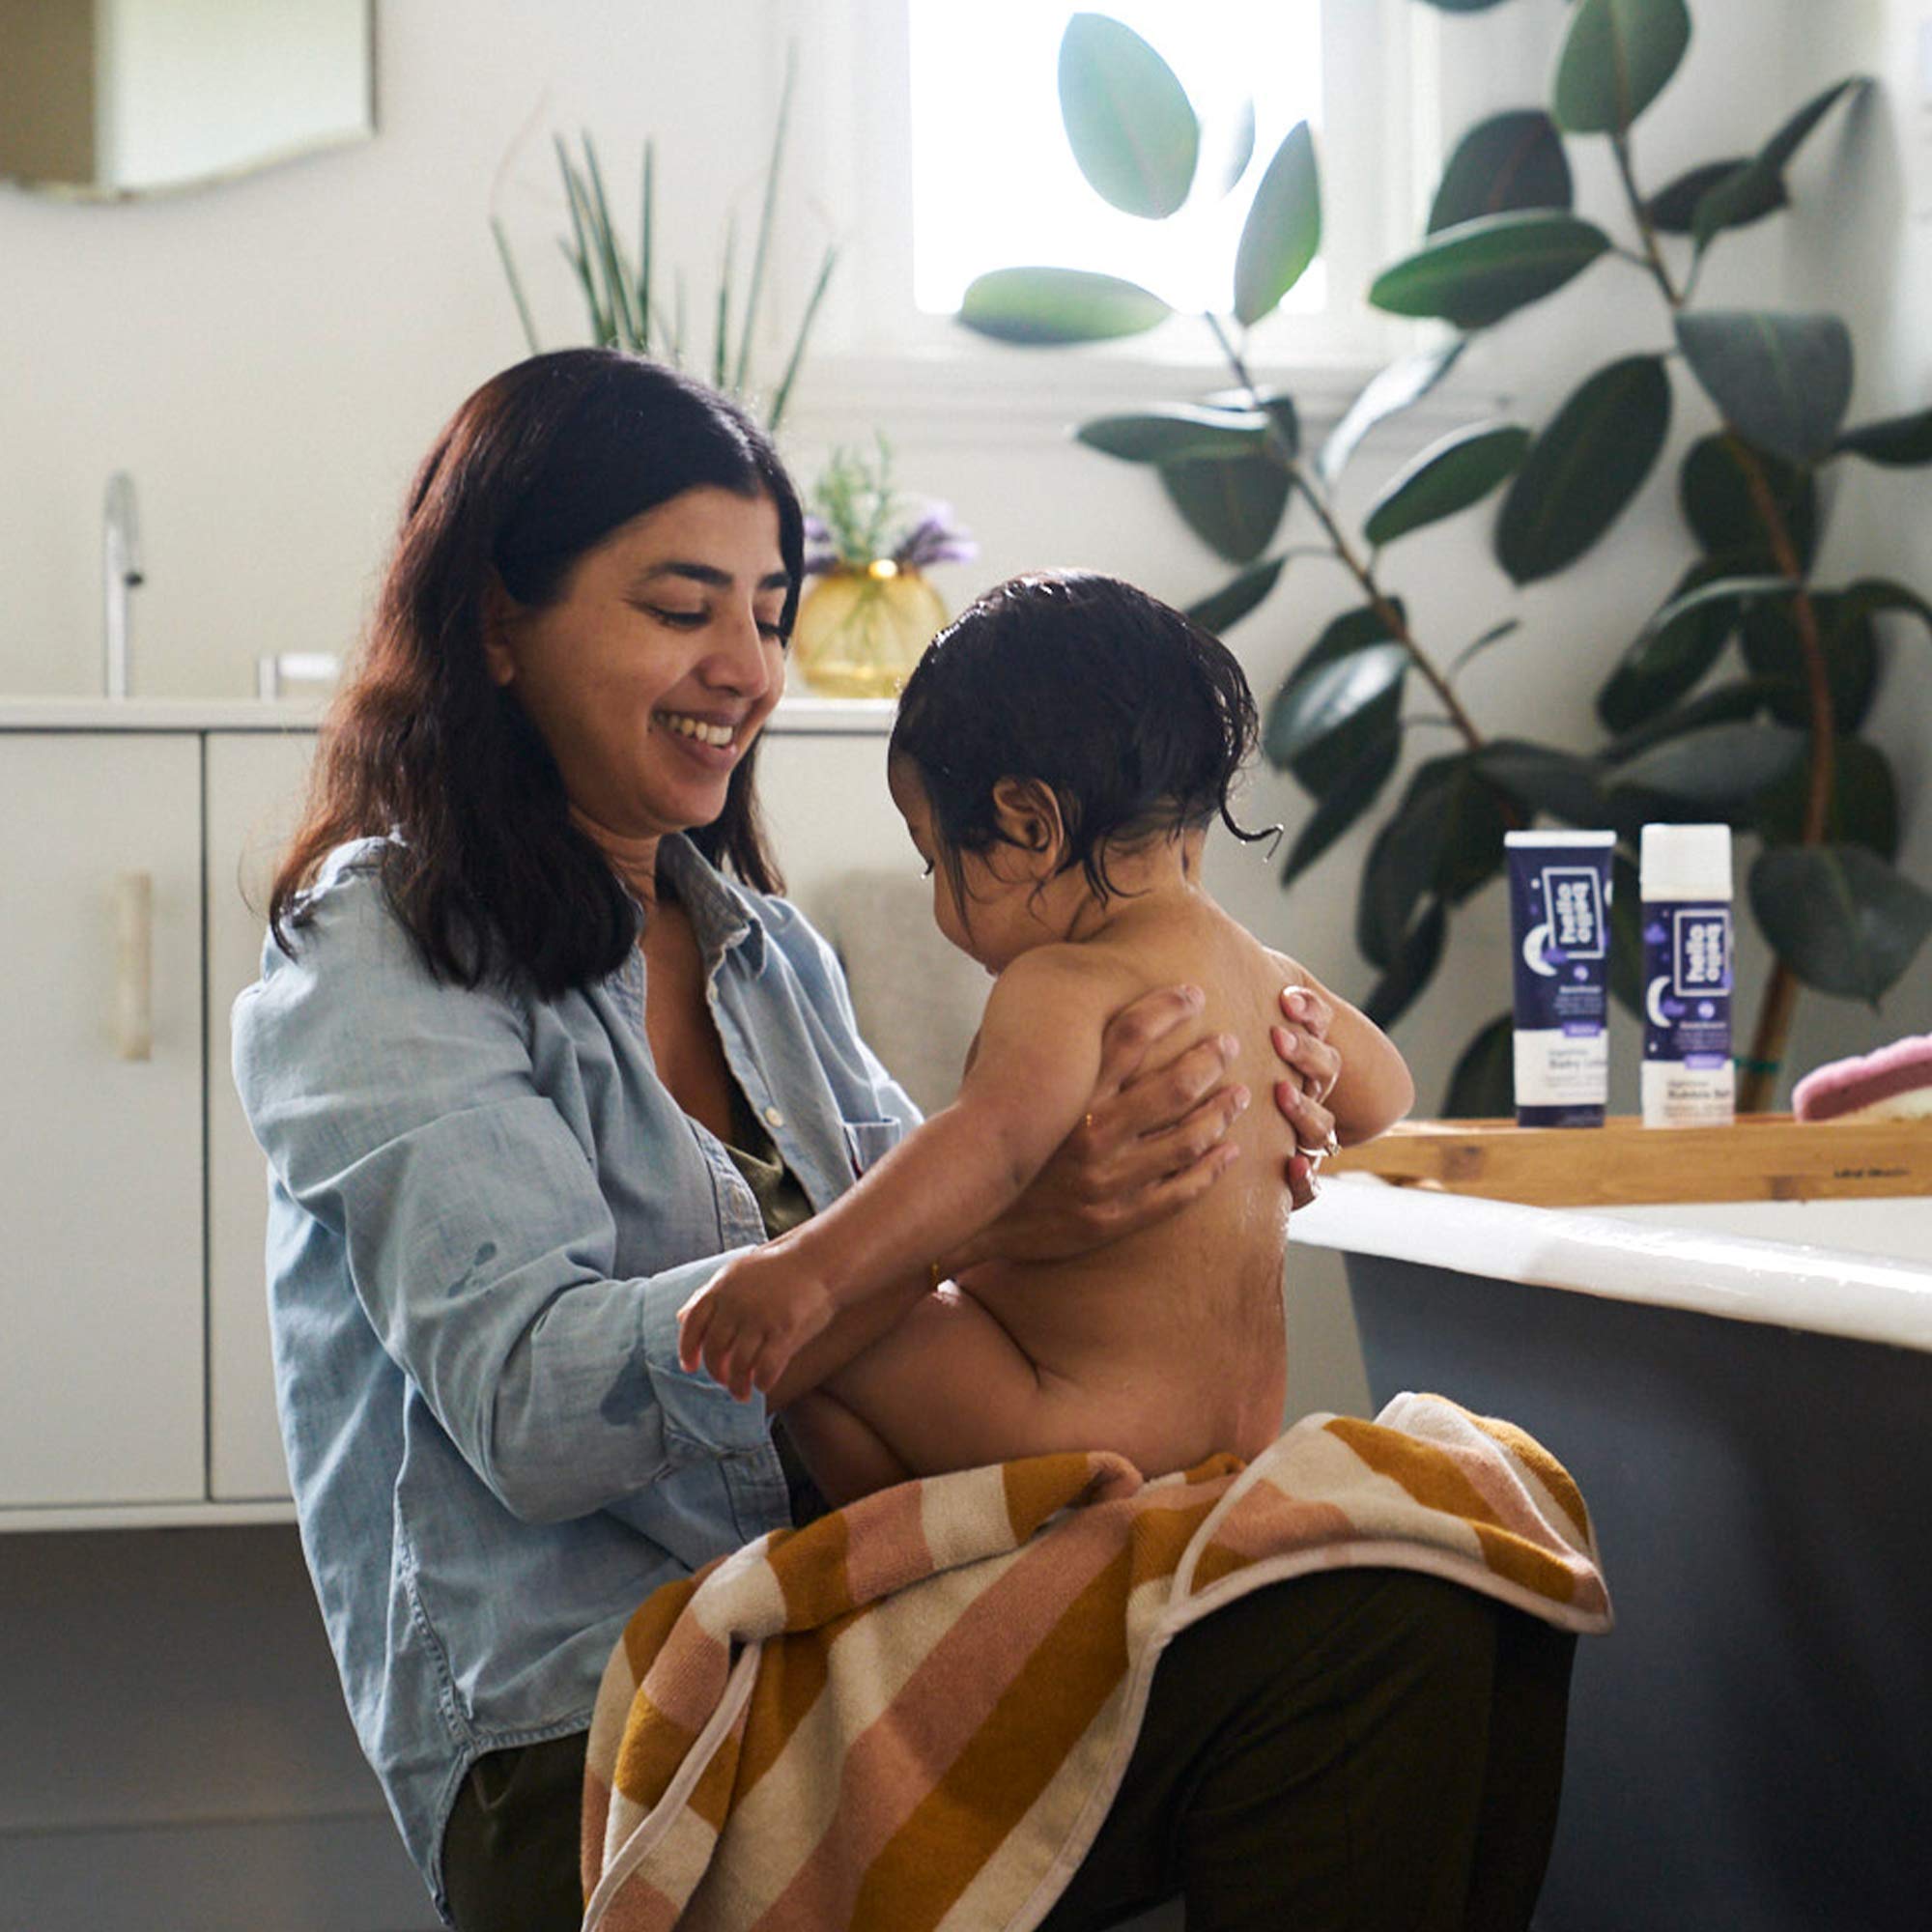 Hello Bello Sleep Sweet Bubble Bath | Tear-Free, Hypoallergenic, Dermatologist & Pediatrician Tested for Babies and Kids | 10 Fl Oz